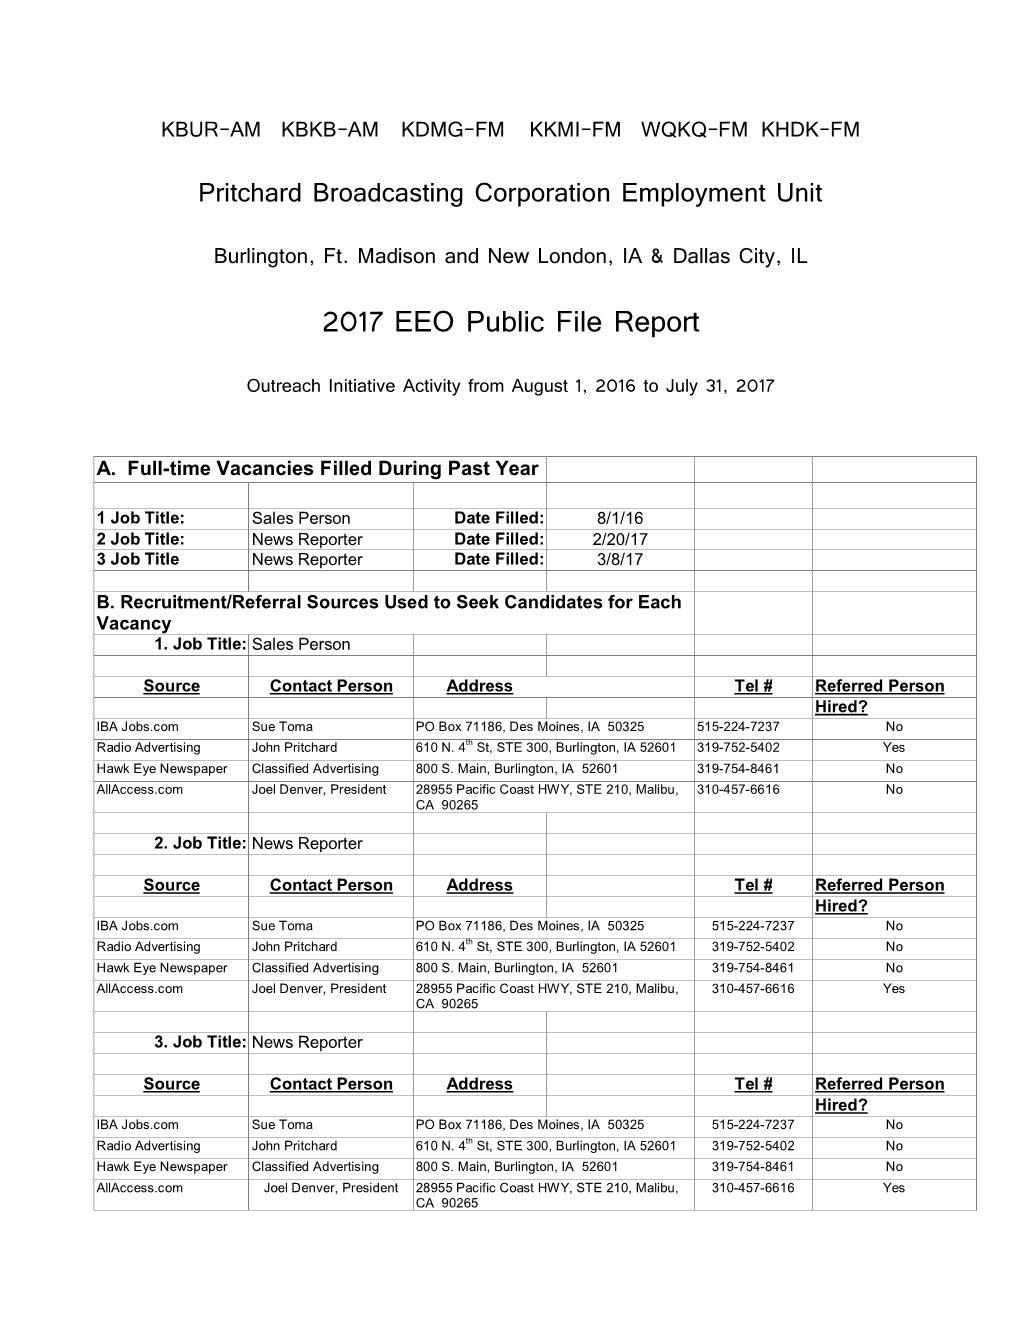 2017 EEO Public File Report